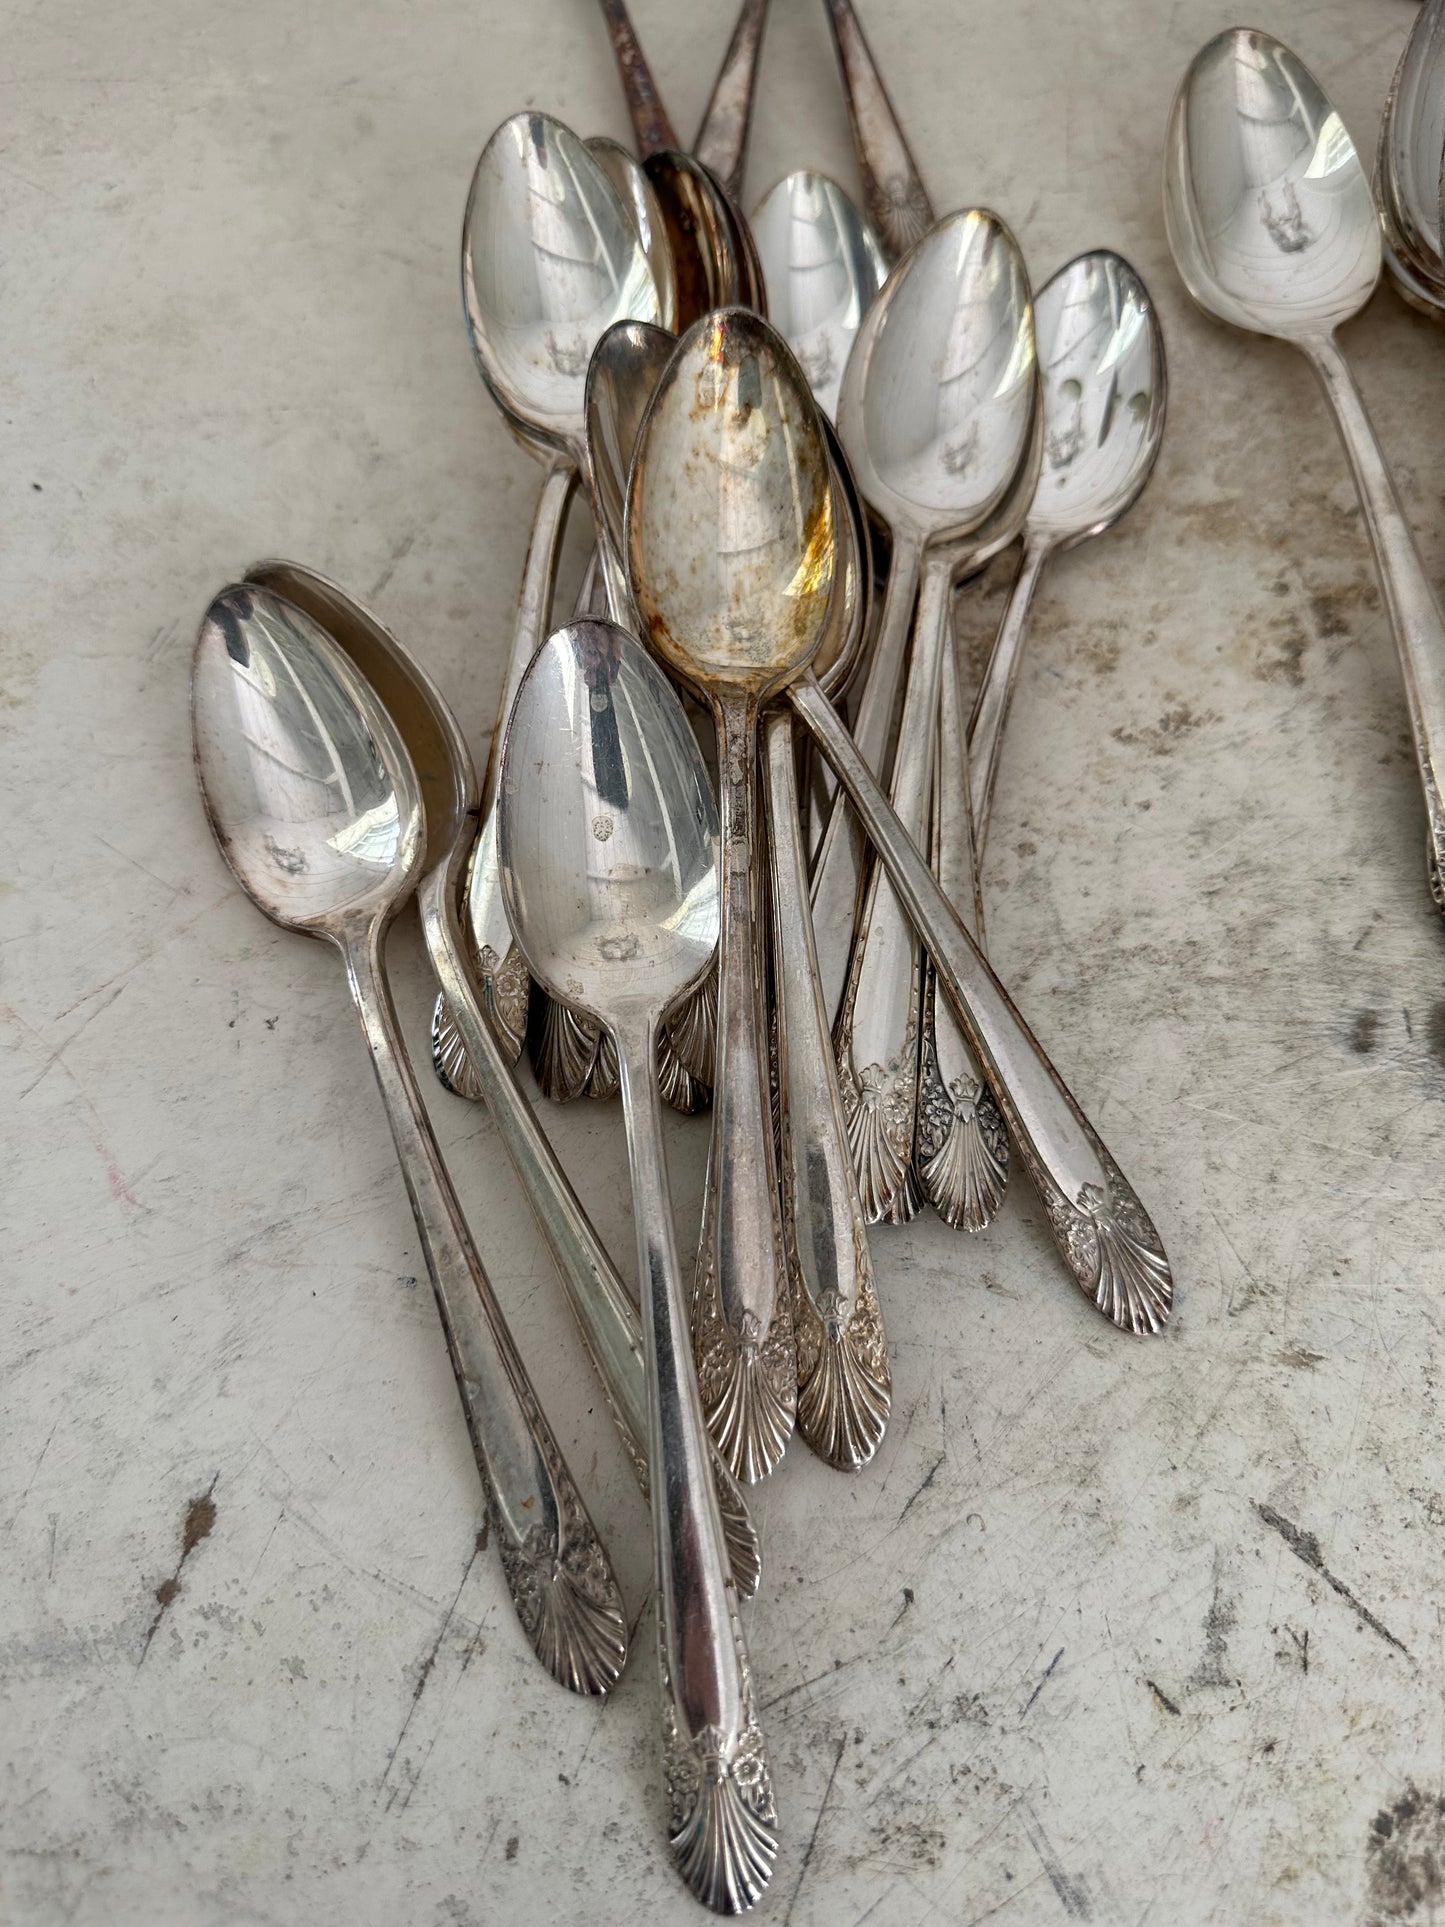 Vintage Tarnished Silverware - sold individually no